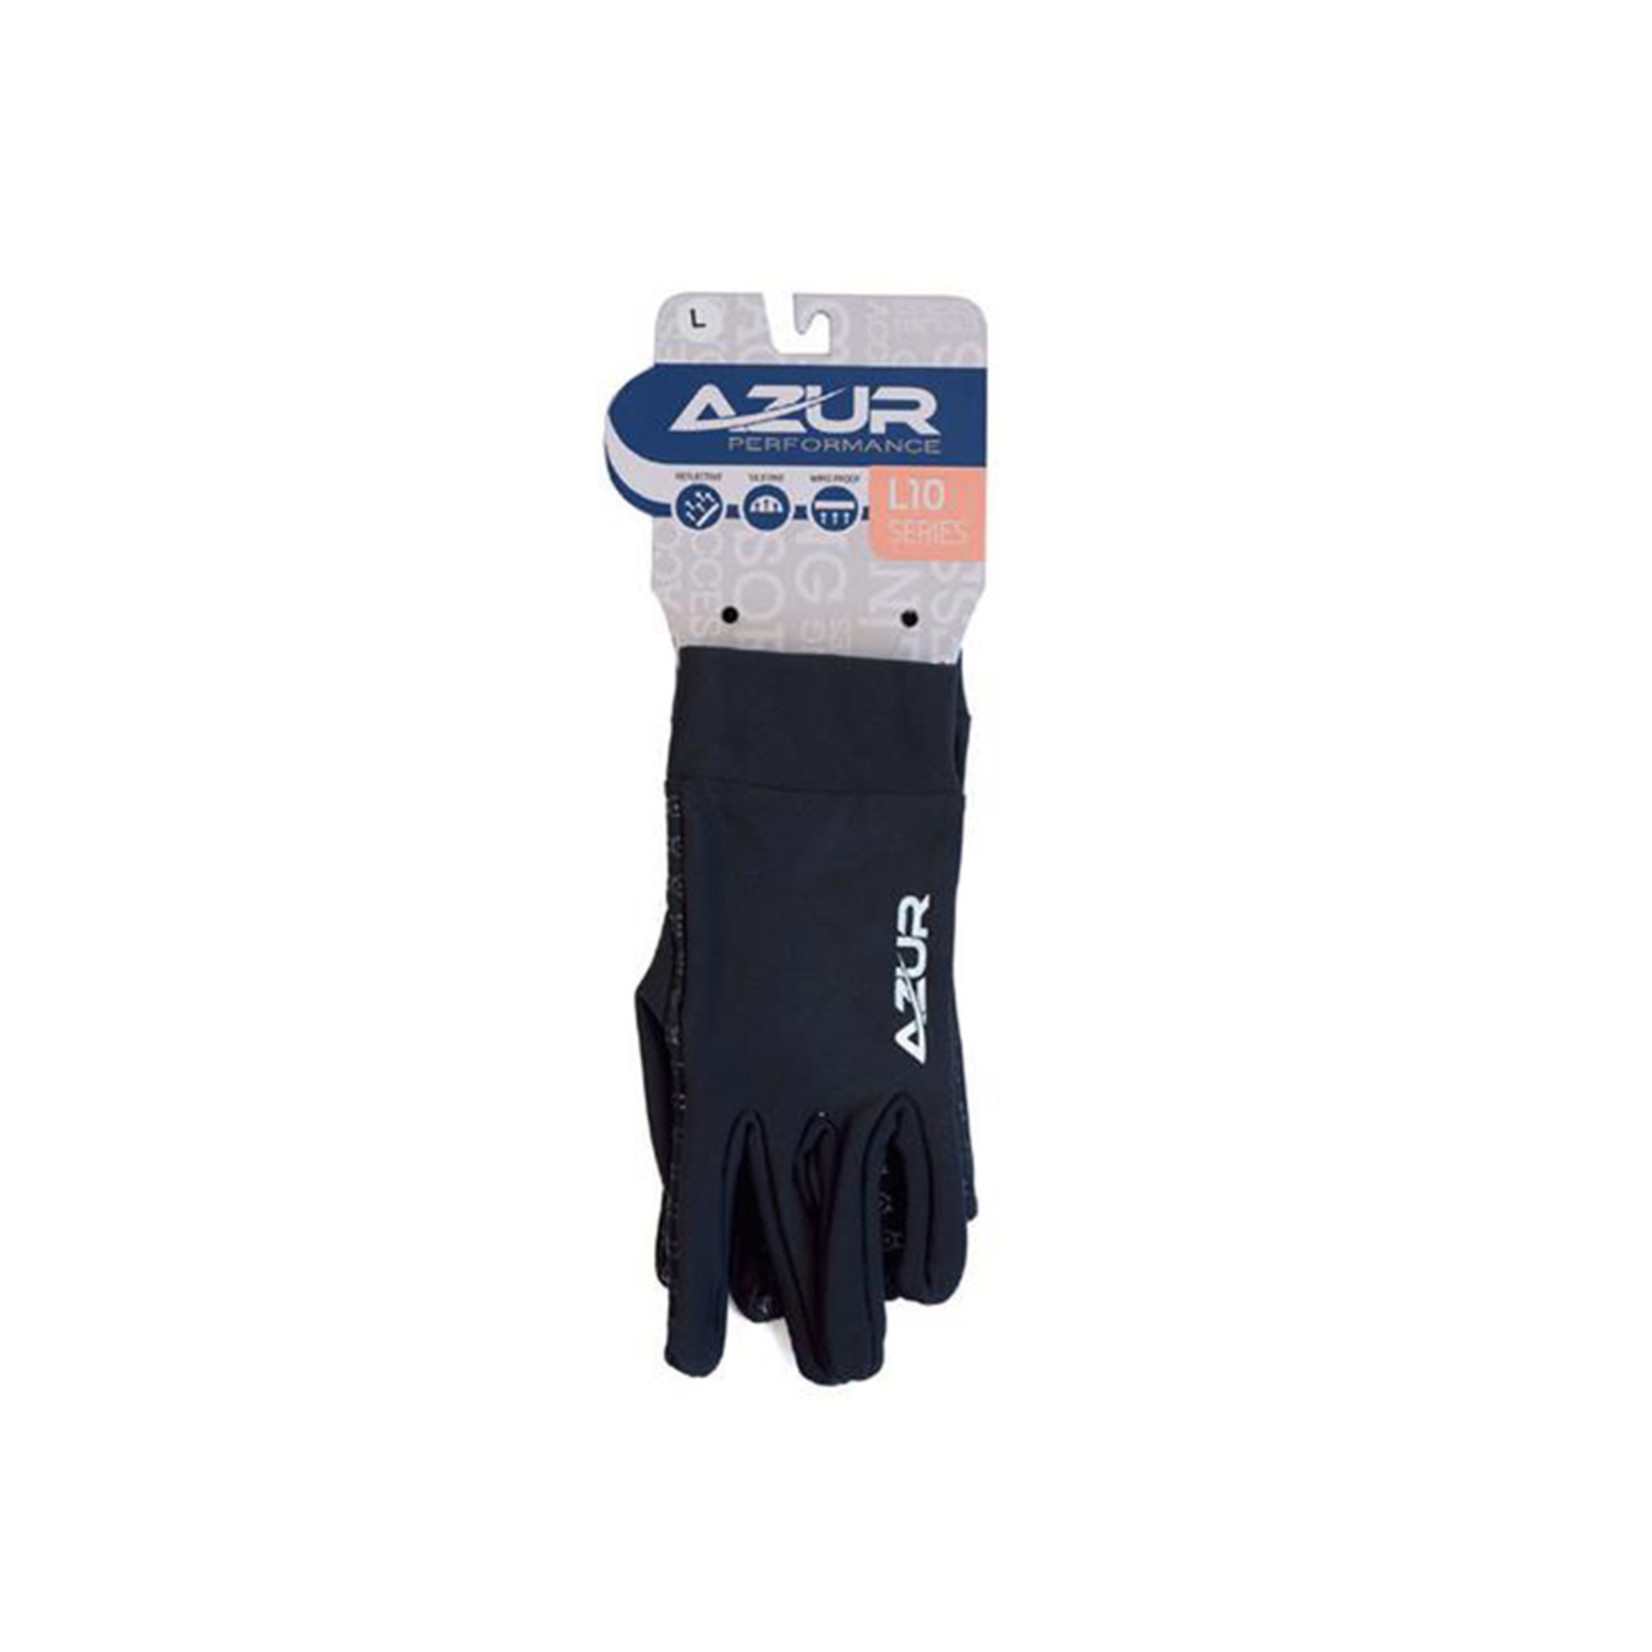 Azur Azur Bike/Bicycle Glove - Reflective Silicone Palm - L10 Series - Black - XSmall